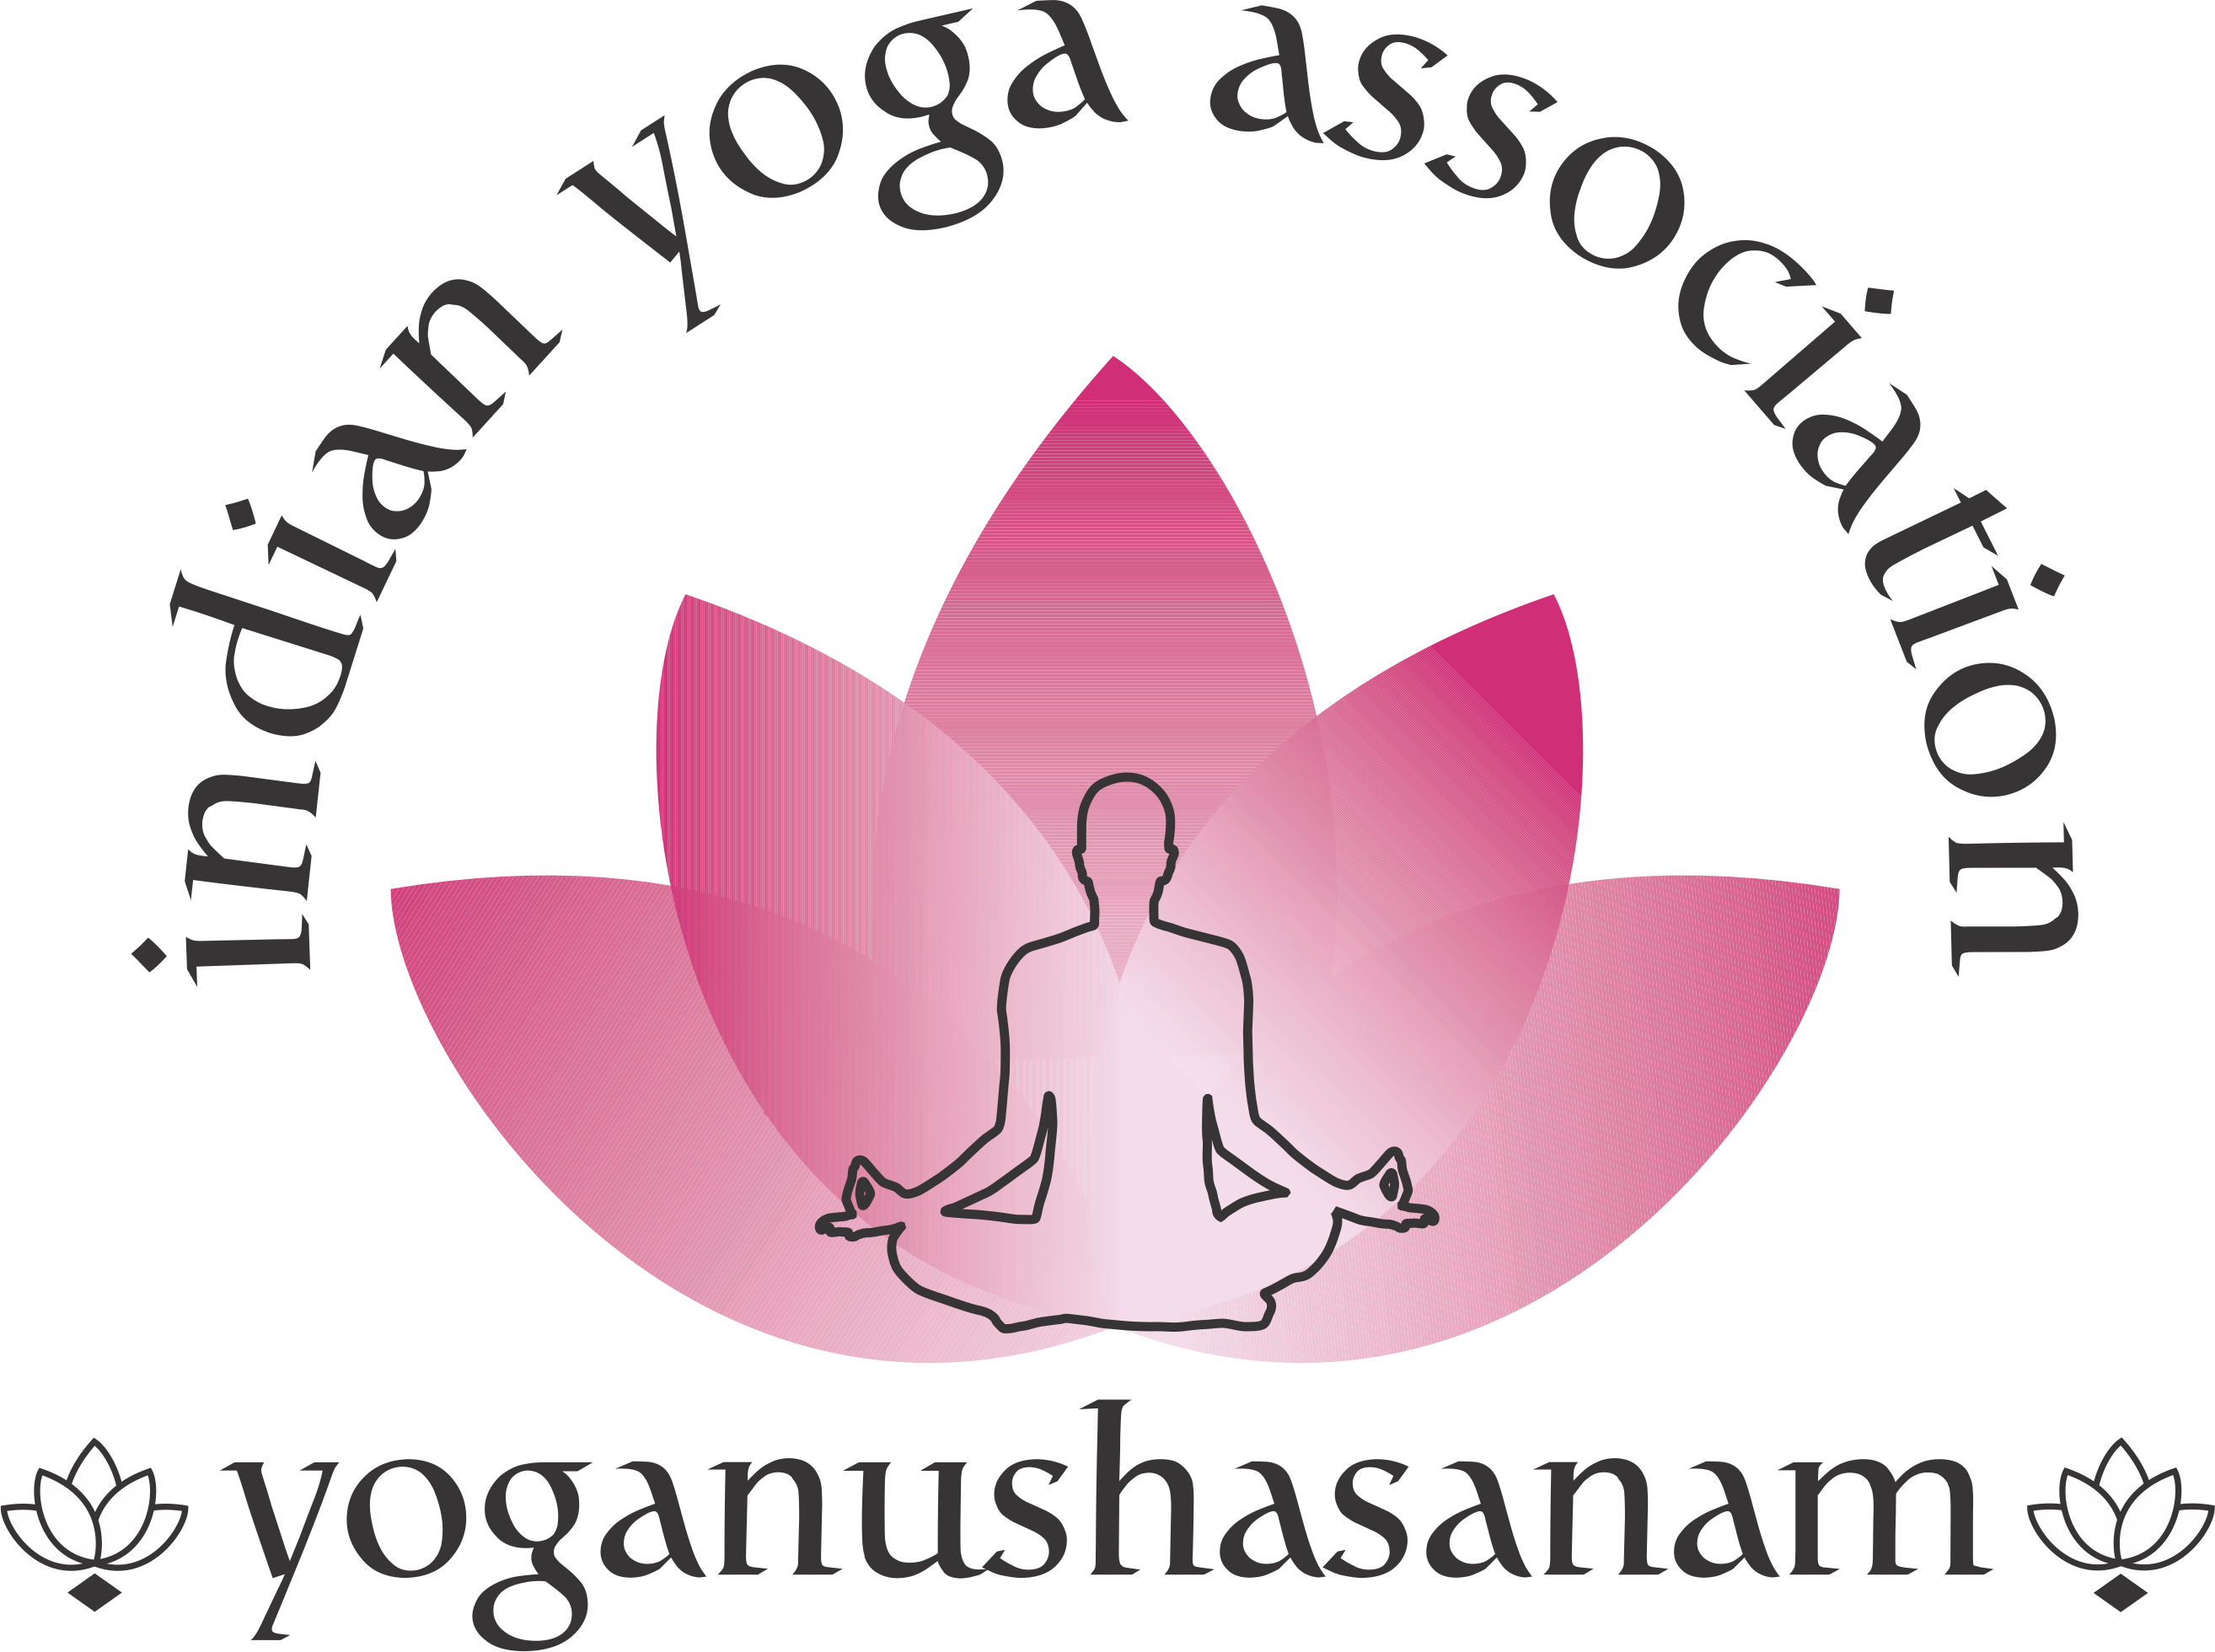 Indian Yoga Association logo